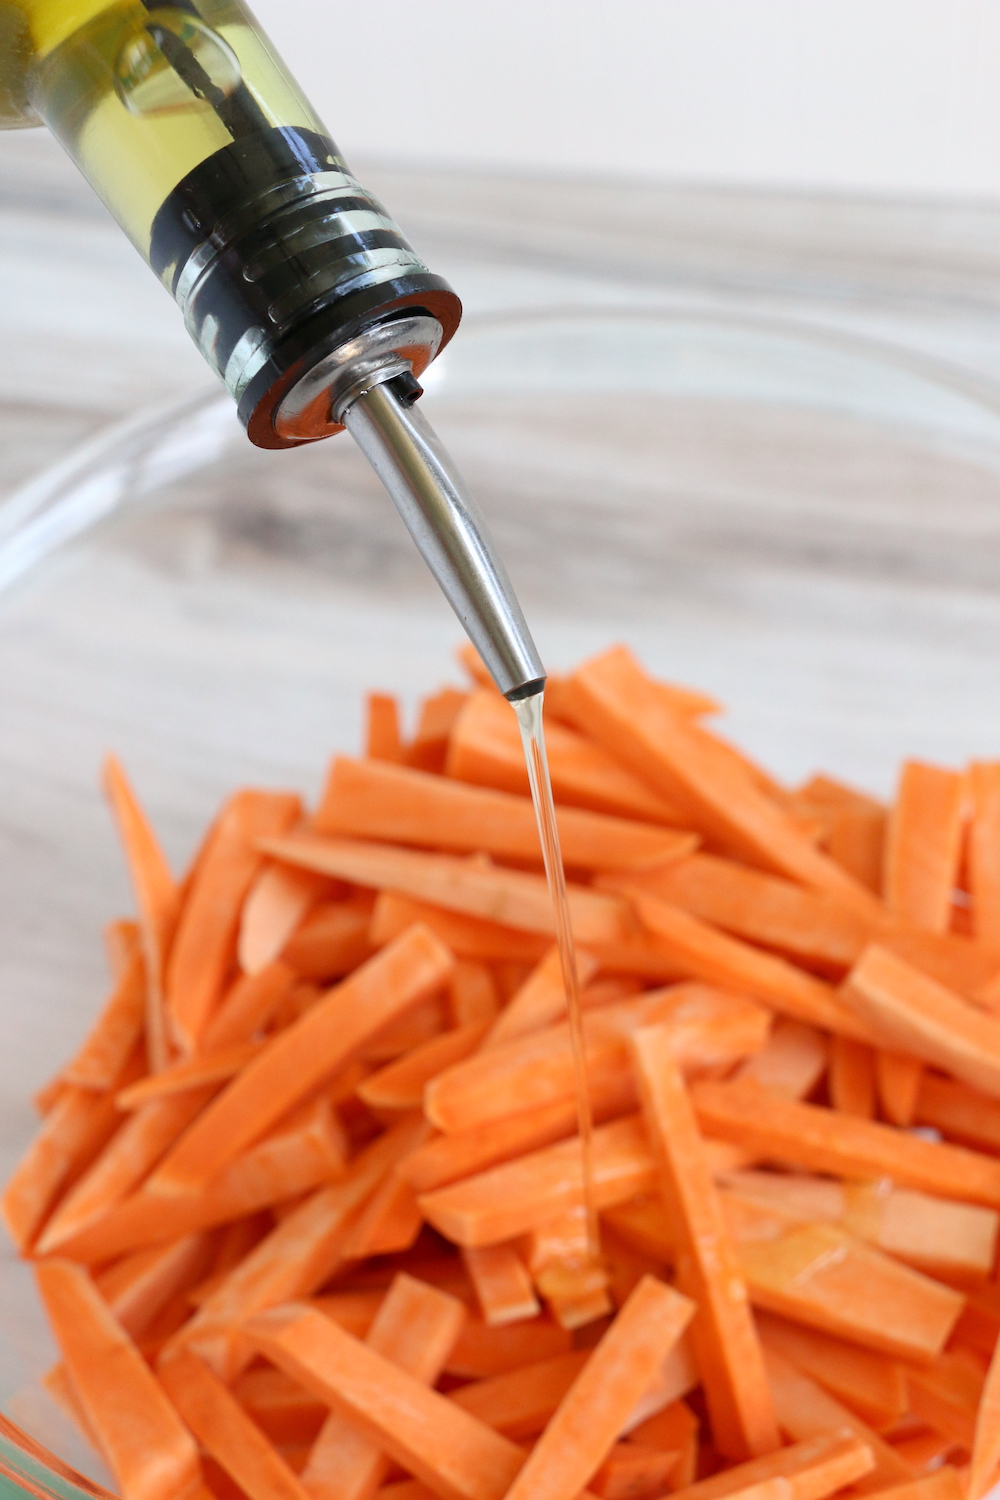 Adding olive oil to sweet potato fries